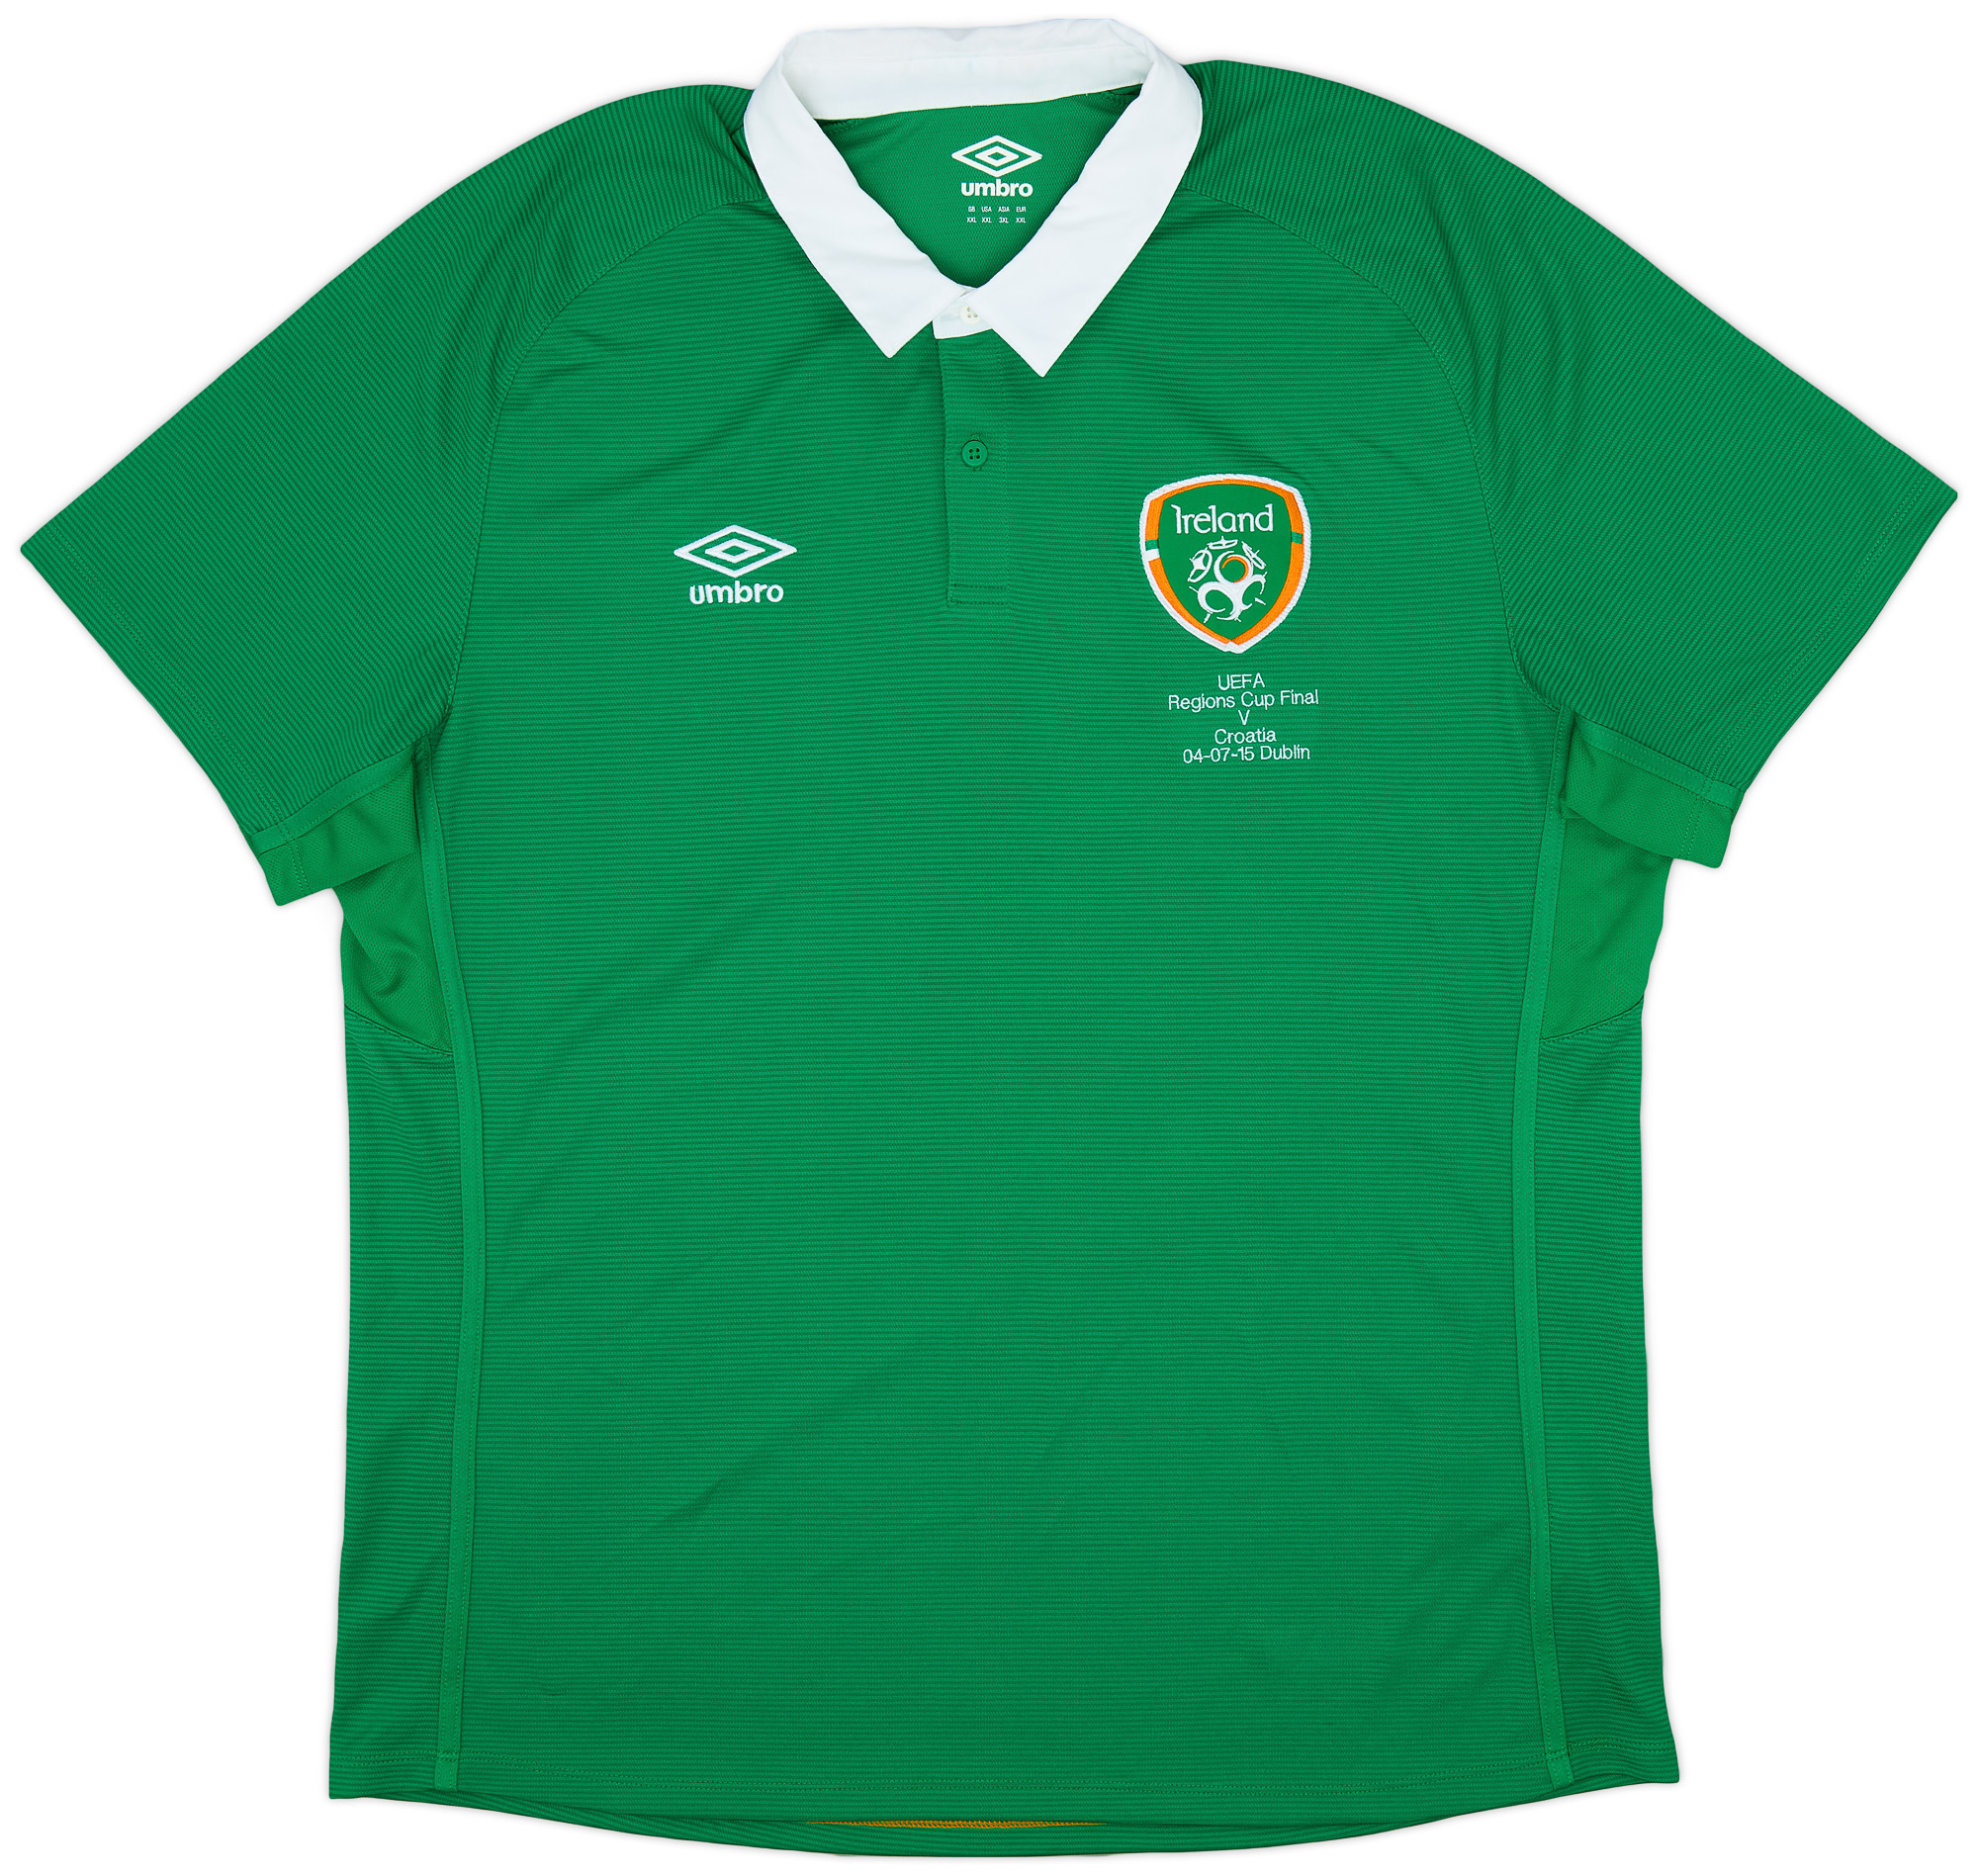 2014-16 Republic of Ireland 'UEFA Regions Cup Final' Home Shirt - 9/10 - ()